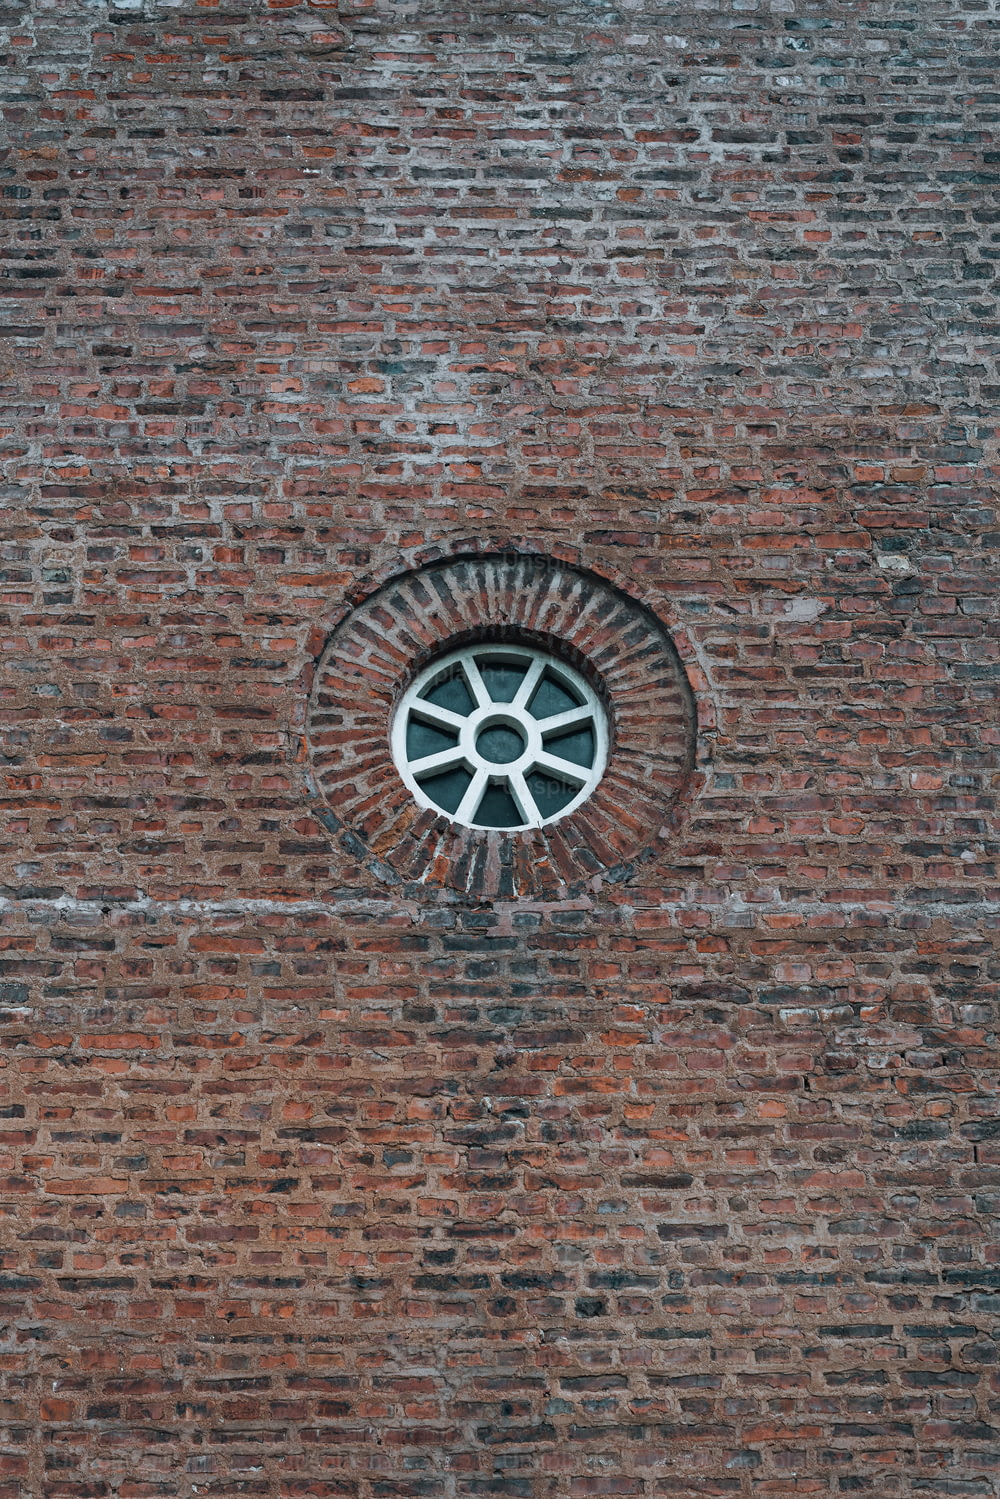 a round window in a brick wall